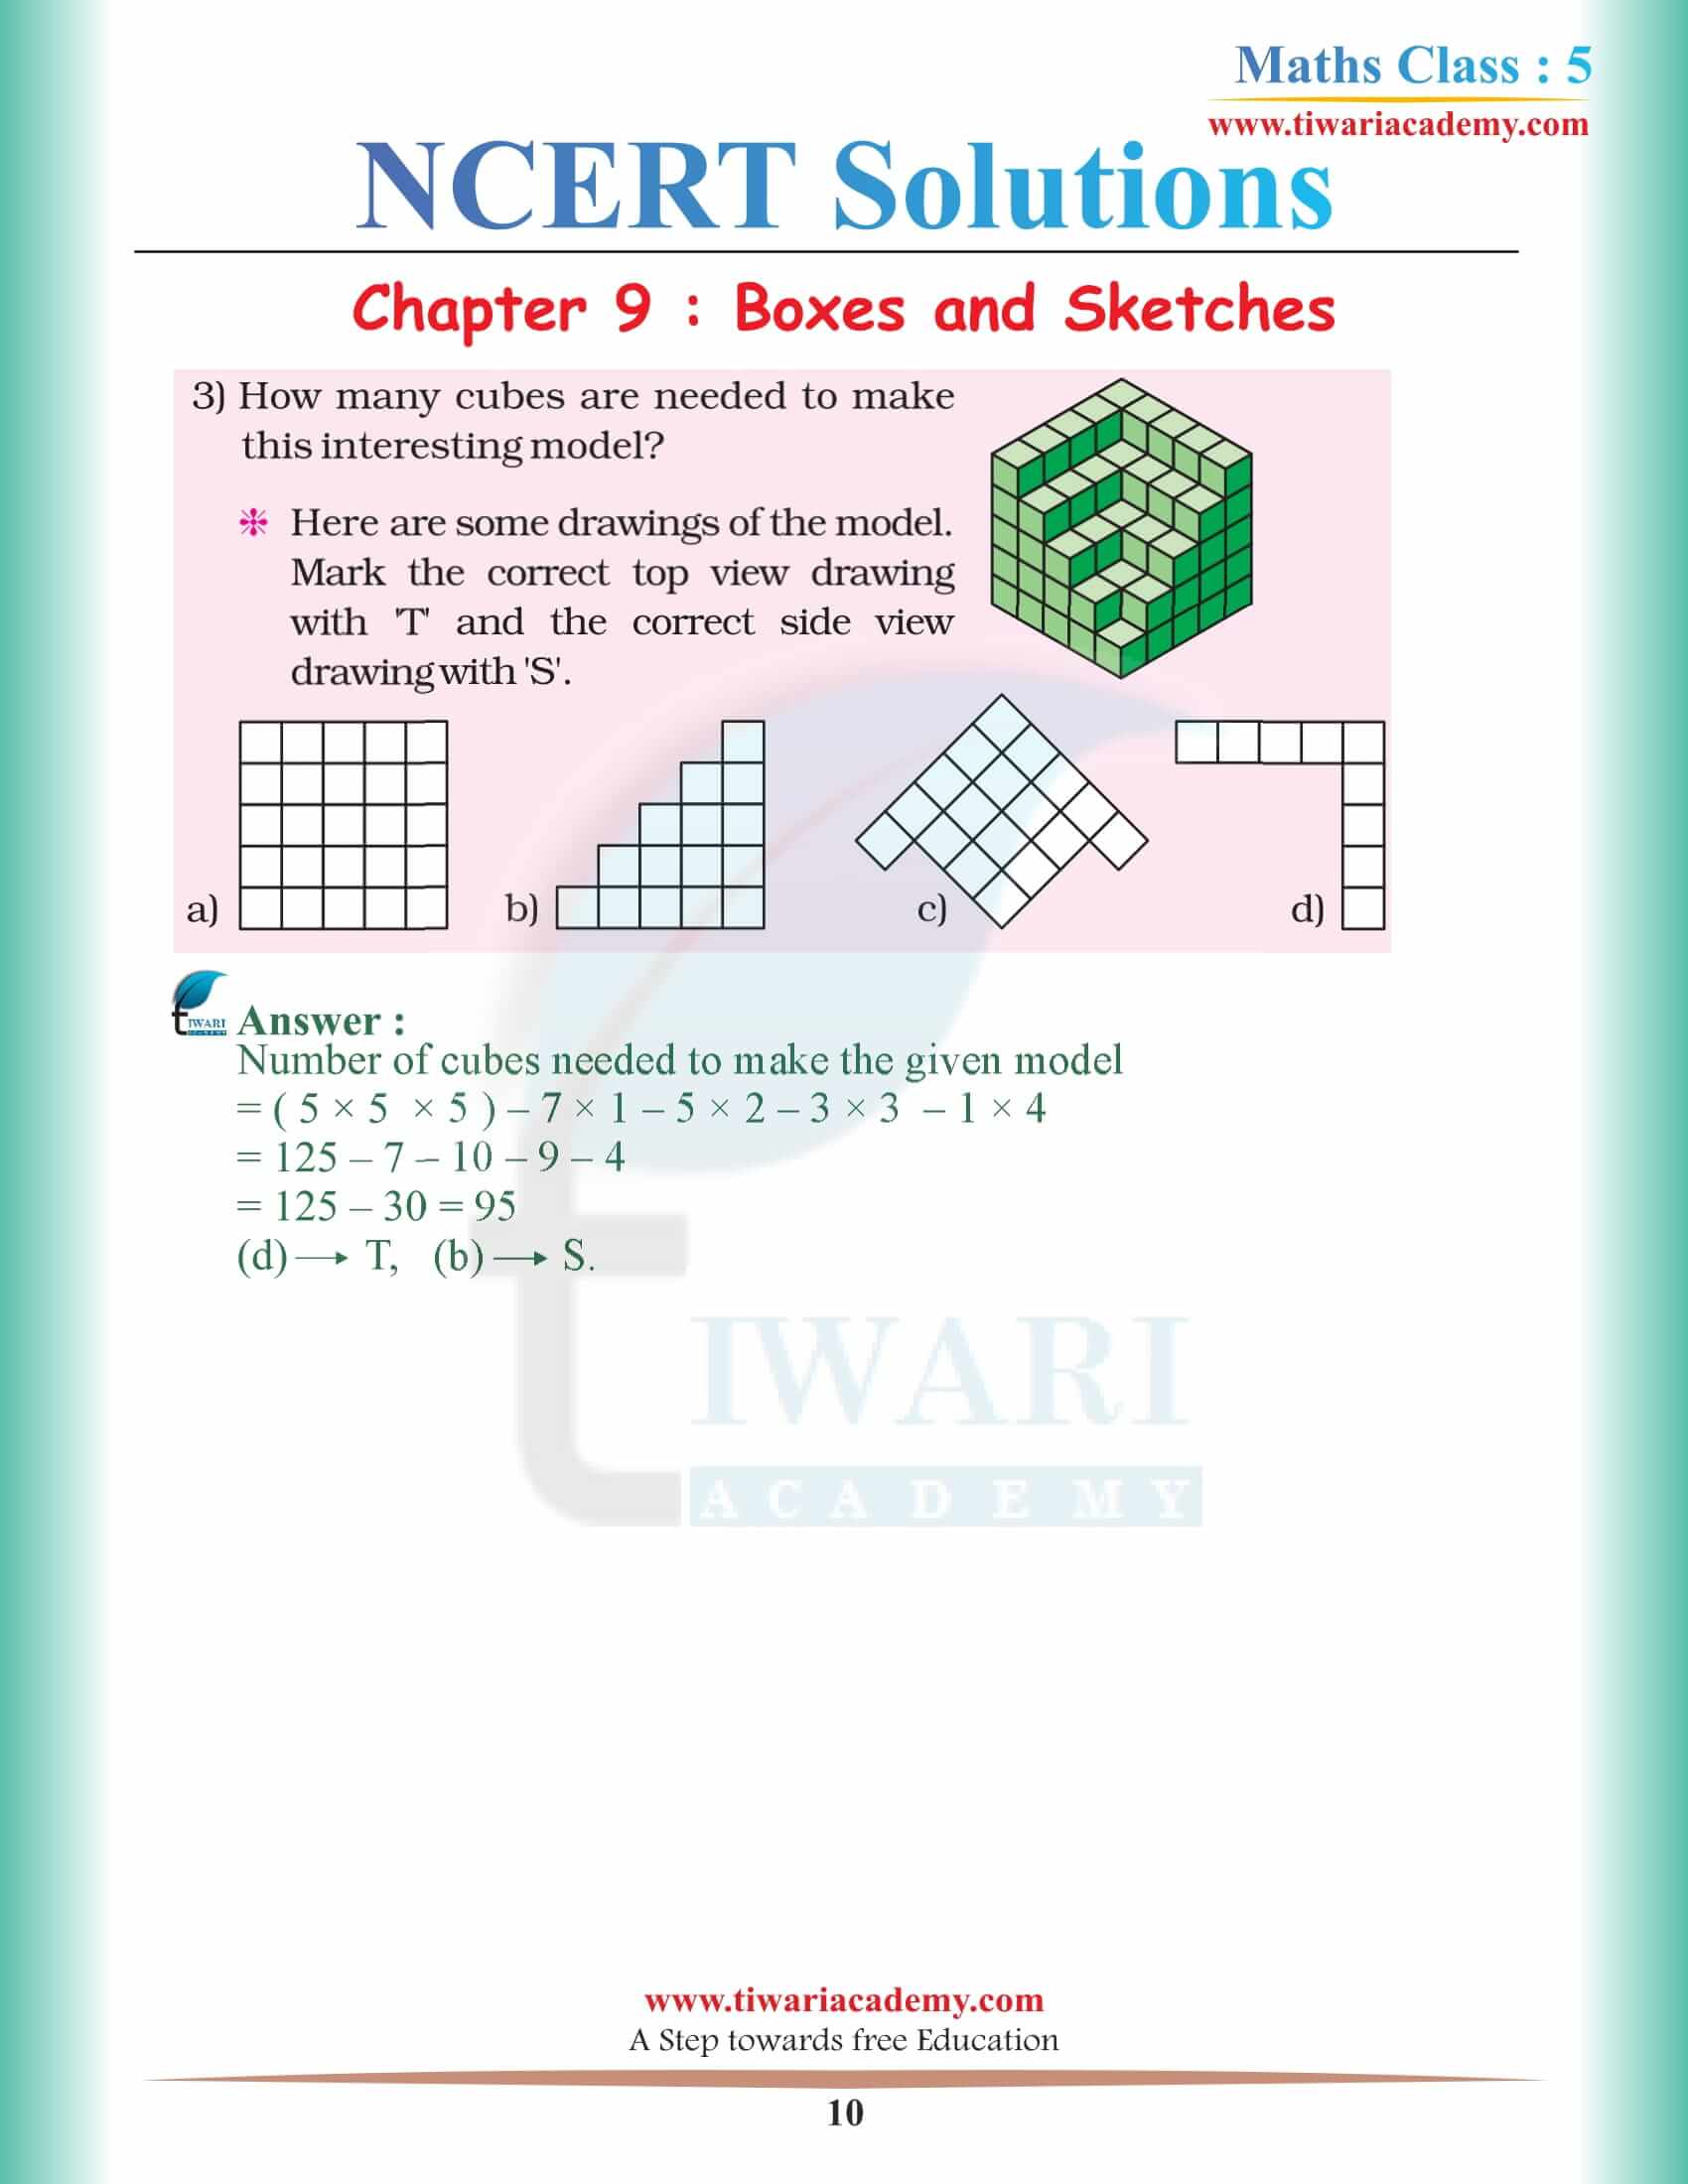 Class 5 Maths NCERT Chapter 9 Solutions free download